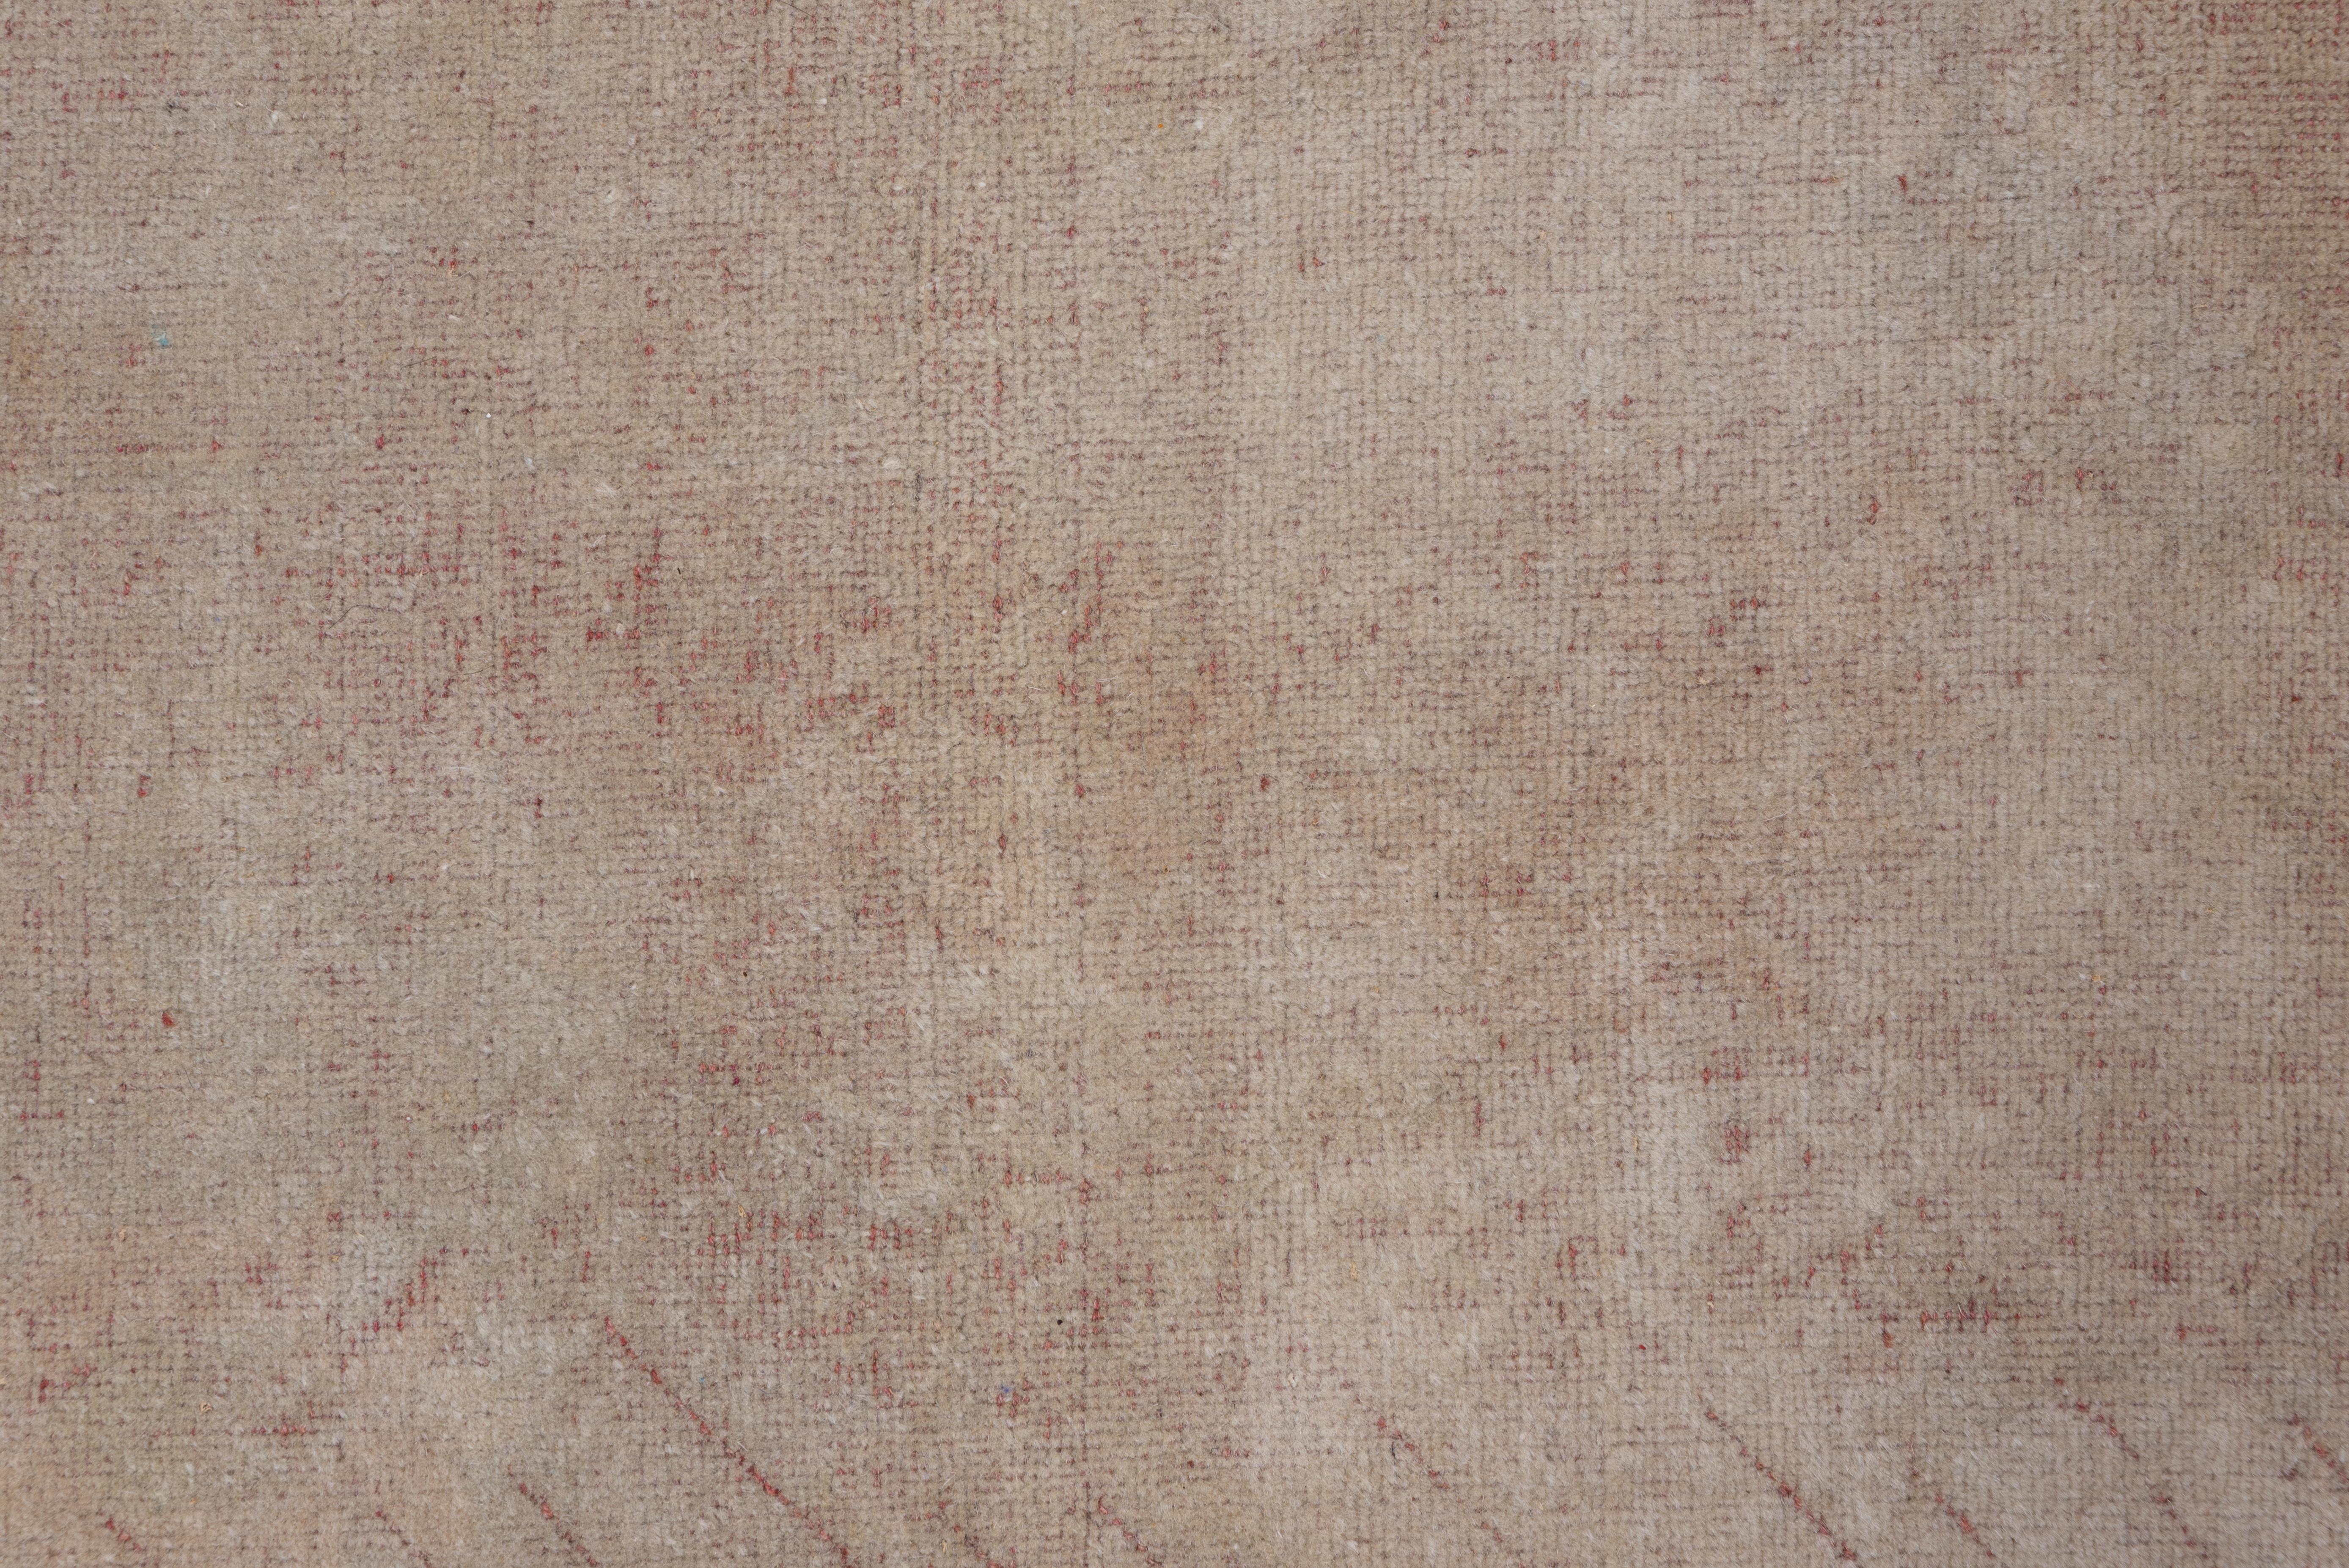 Turkish Vintage Oushak Carpet, Light Pink Accents, Solid Field For Sale